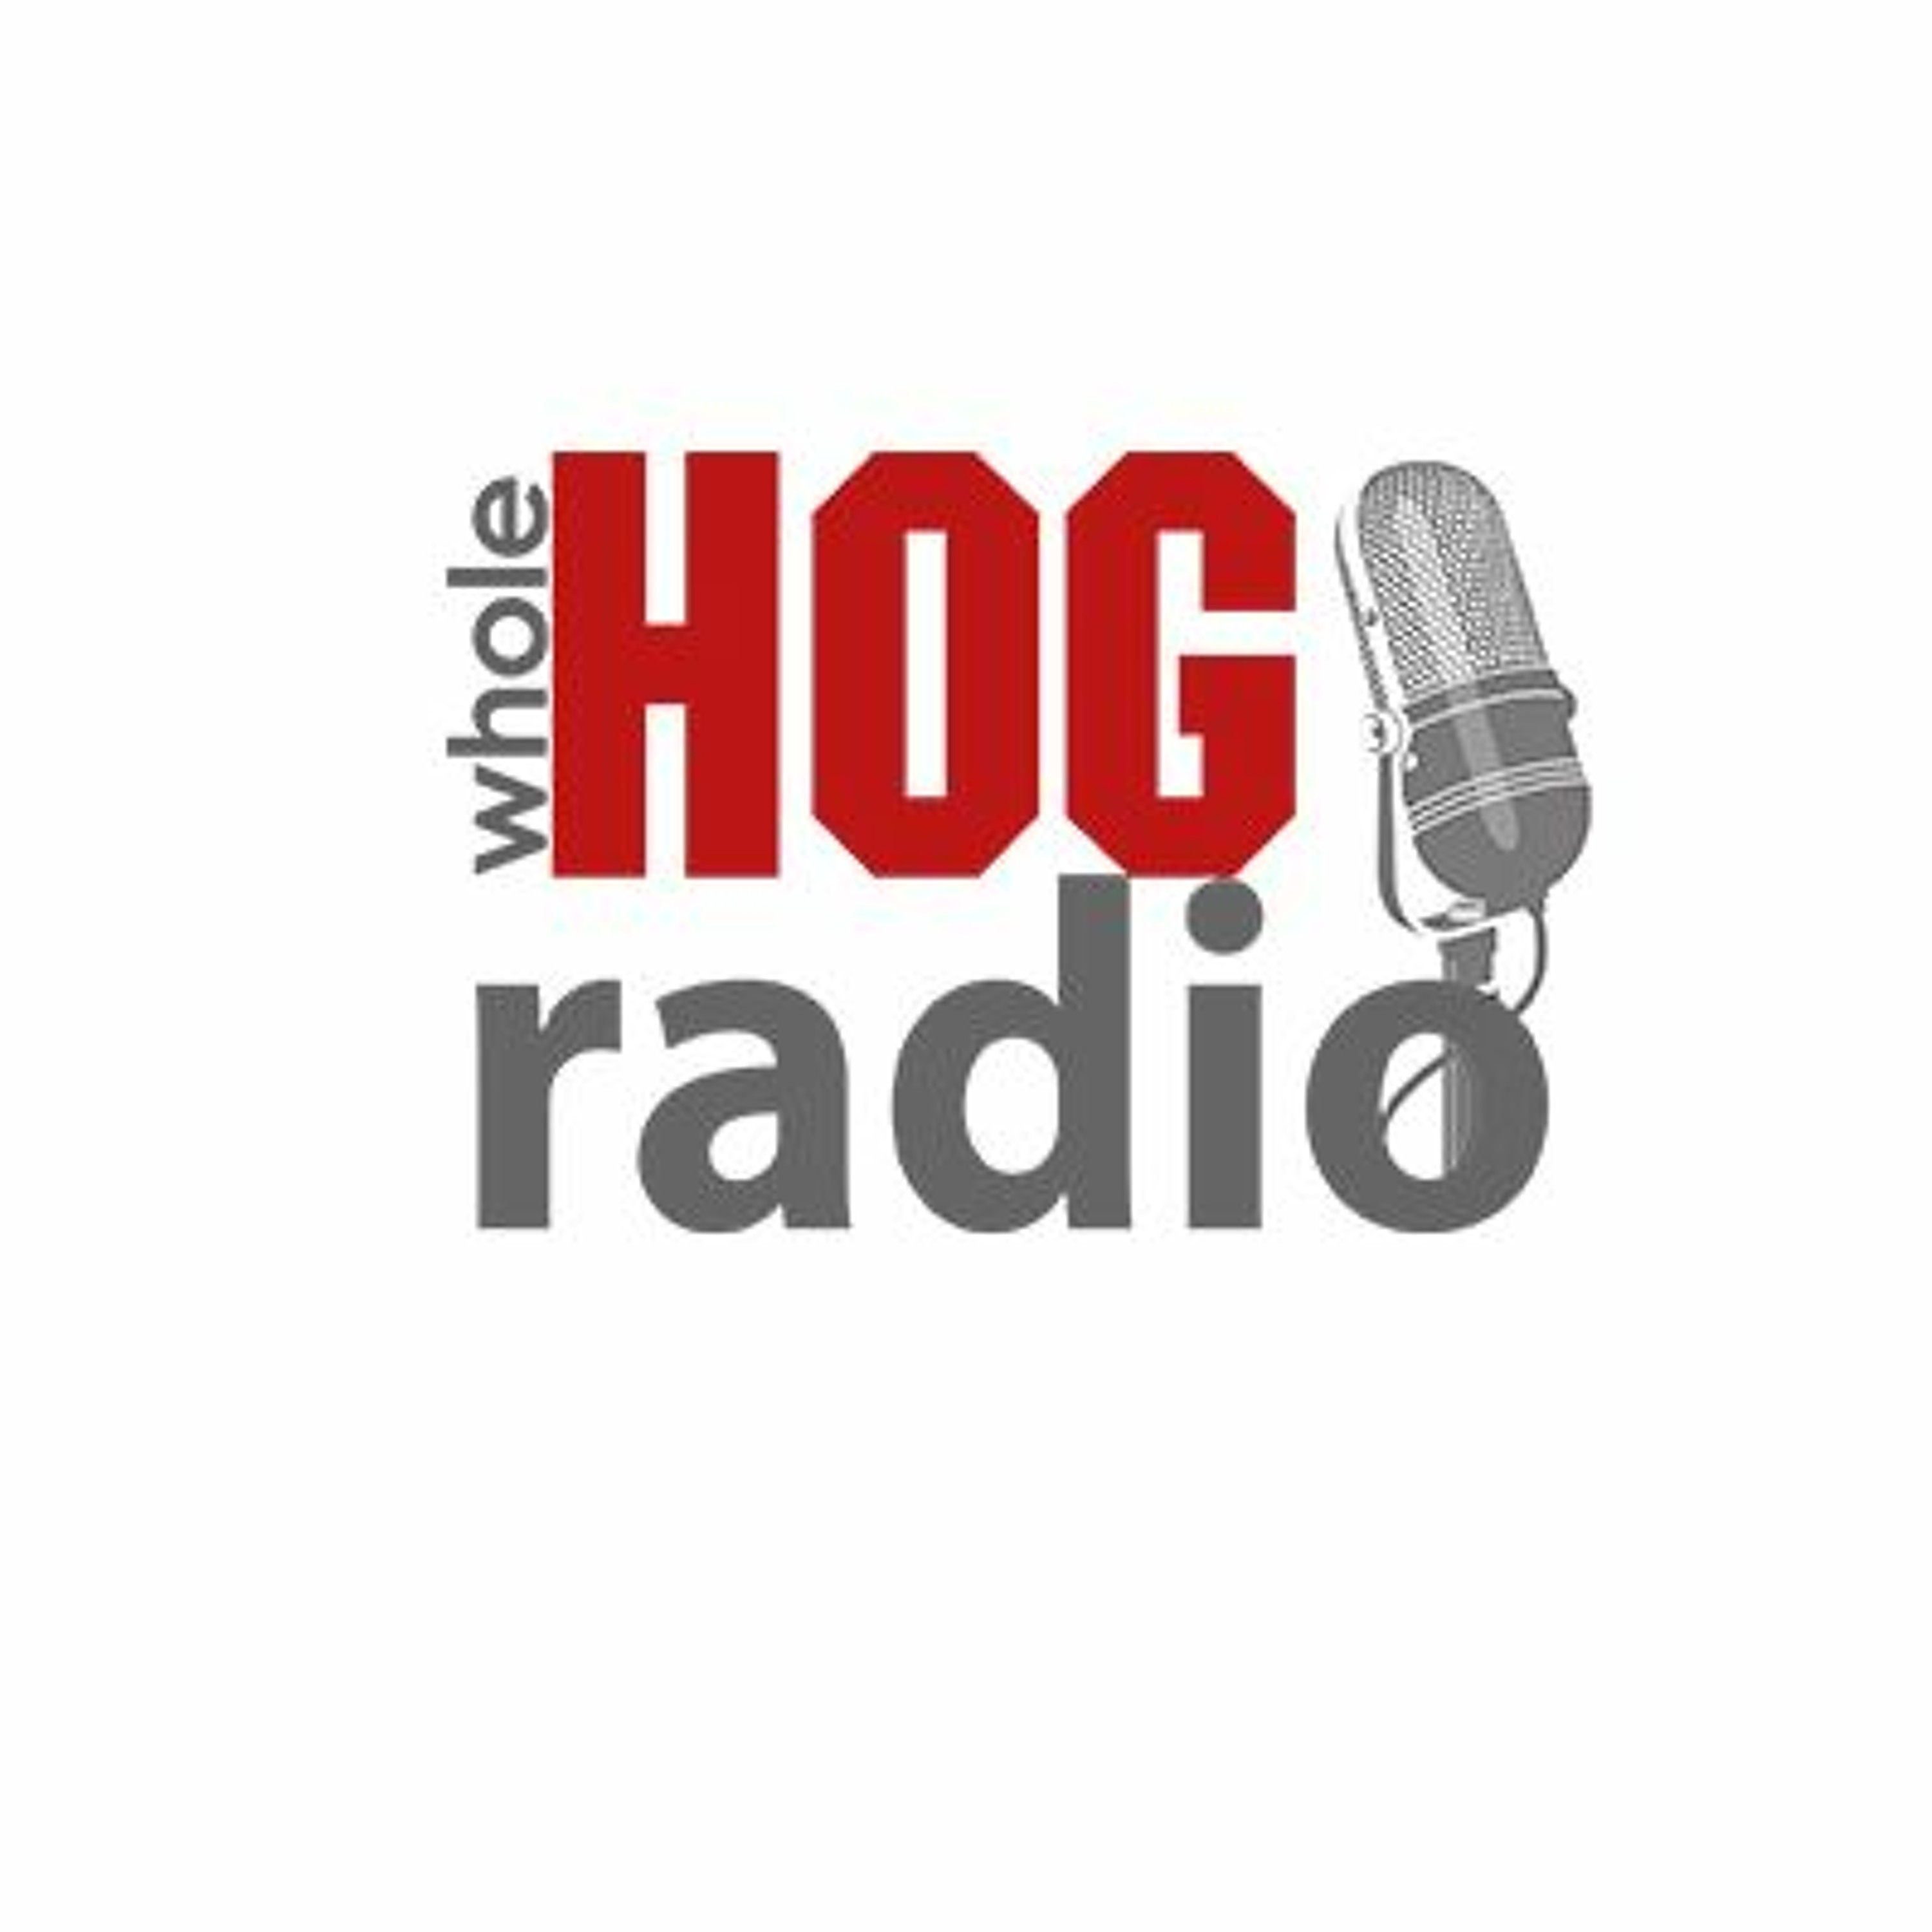 WholeHog Baseball Podcast: Recapping USC with Eric Sorenson of D1Baseball.com